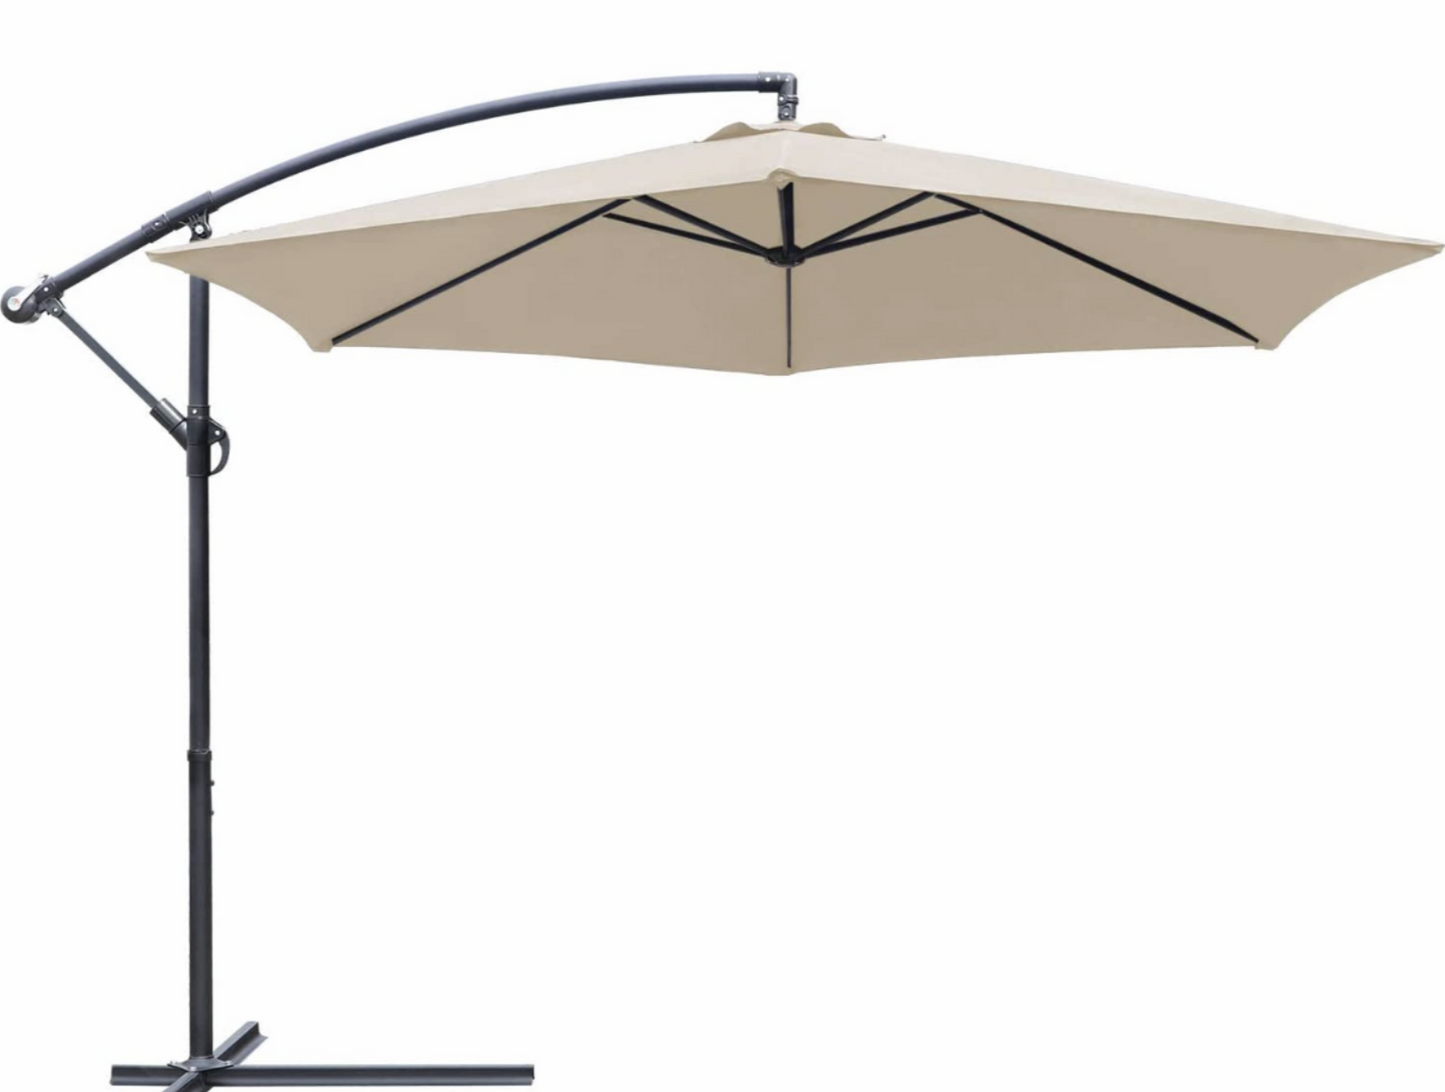 Offset Umbrella 10FT Cantilever Patio Hanging Umbrella Outdoor Market Umbrella with Crank and Cross Base (Beige)